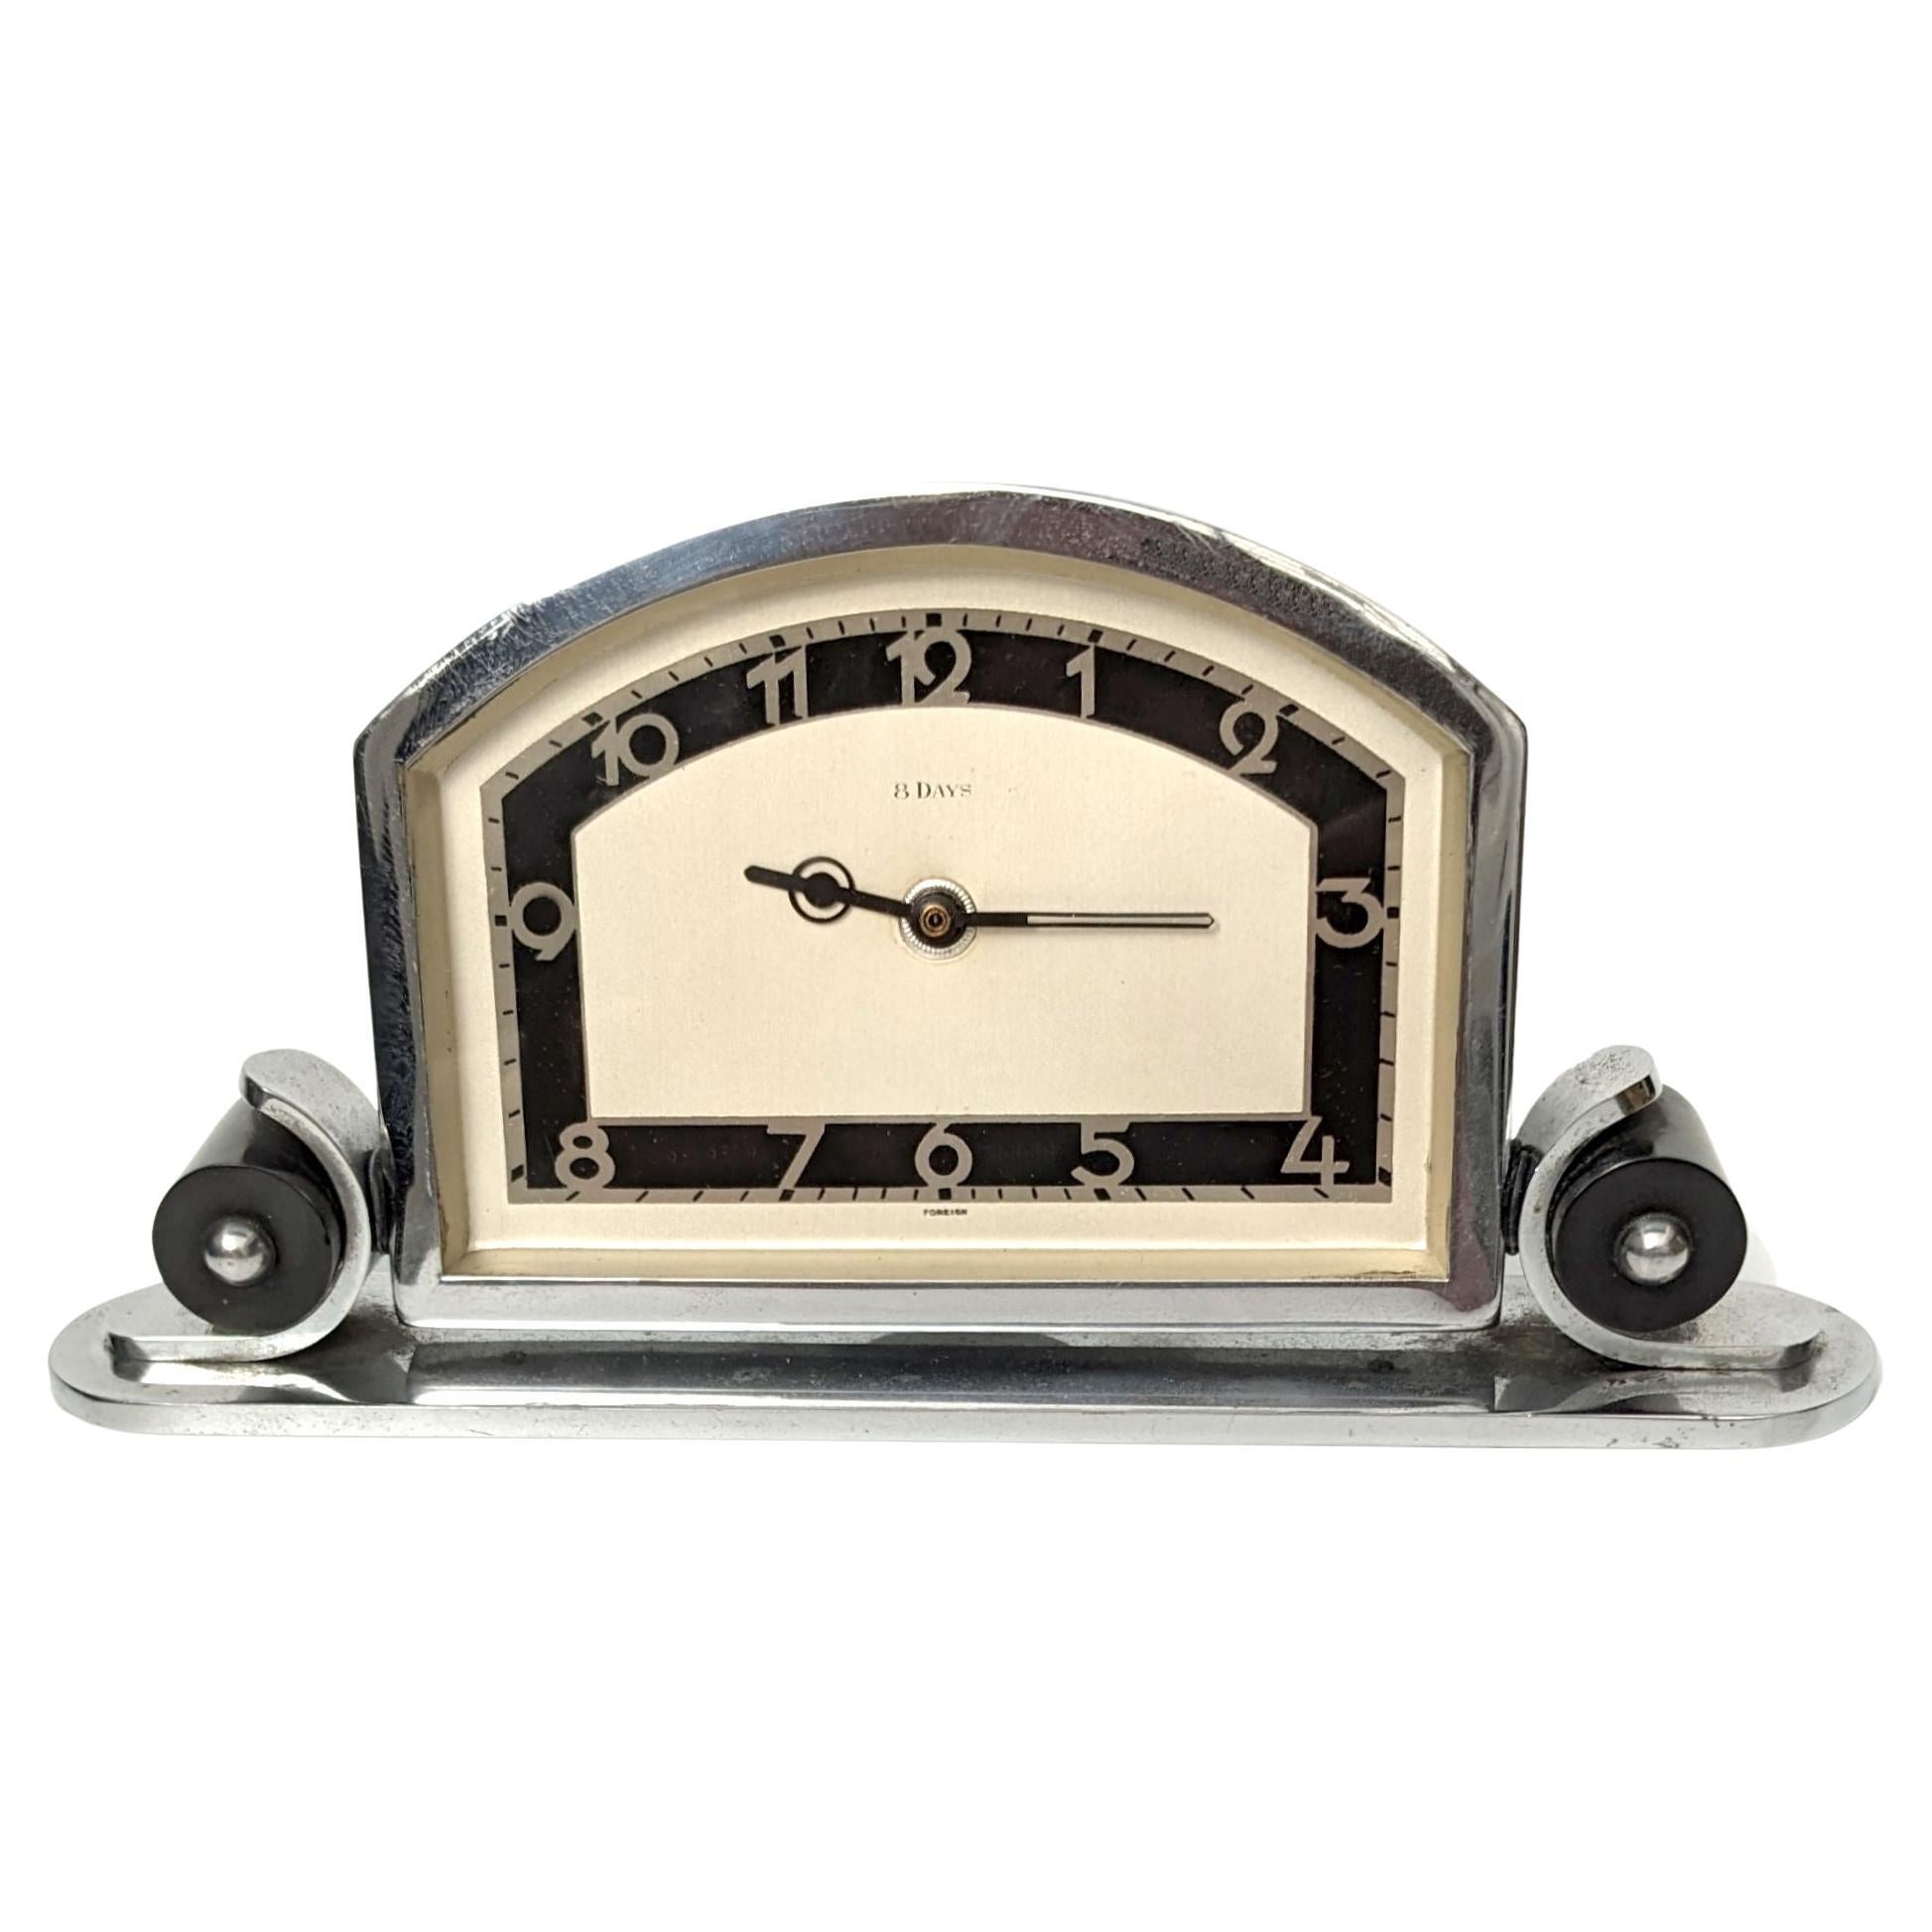 Art Deco 8 Day Manual Chrome Clock, Germany, c1930